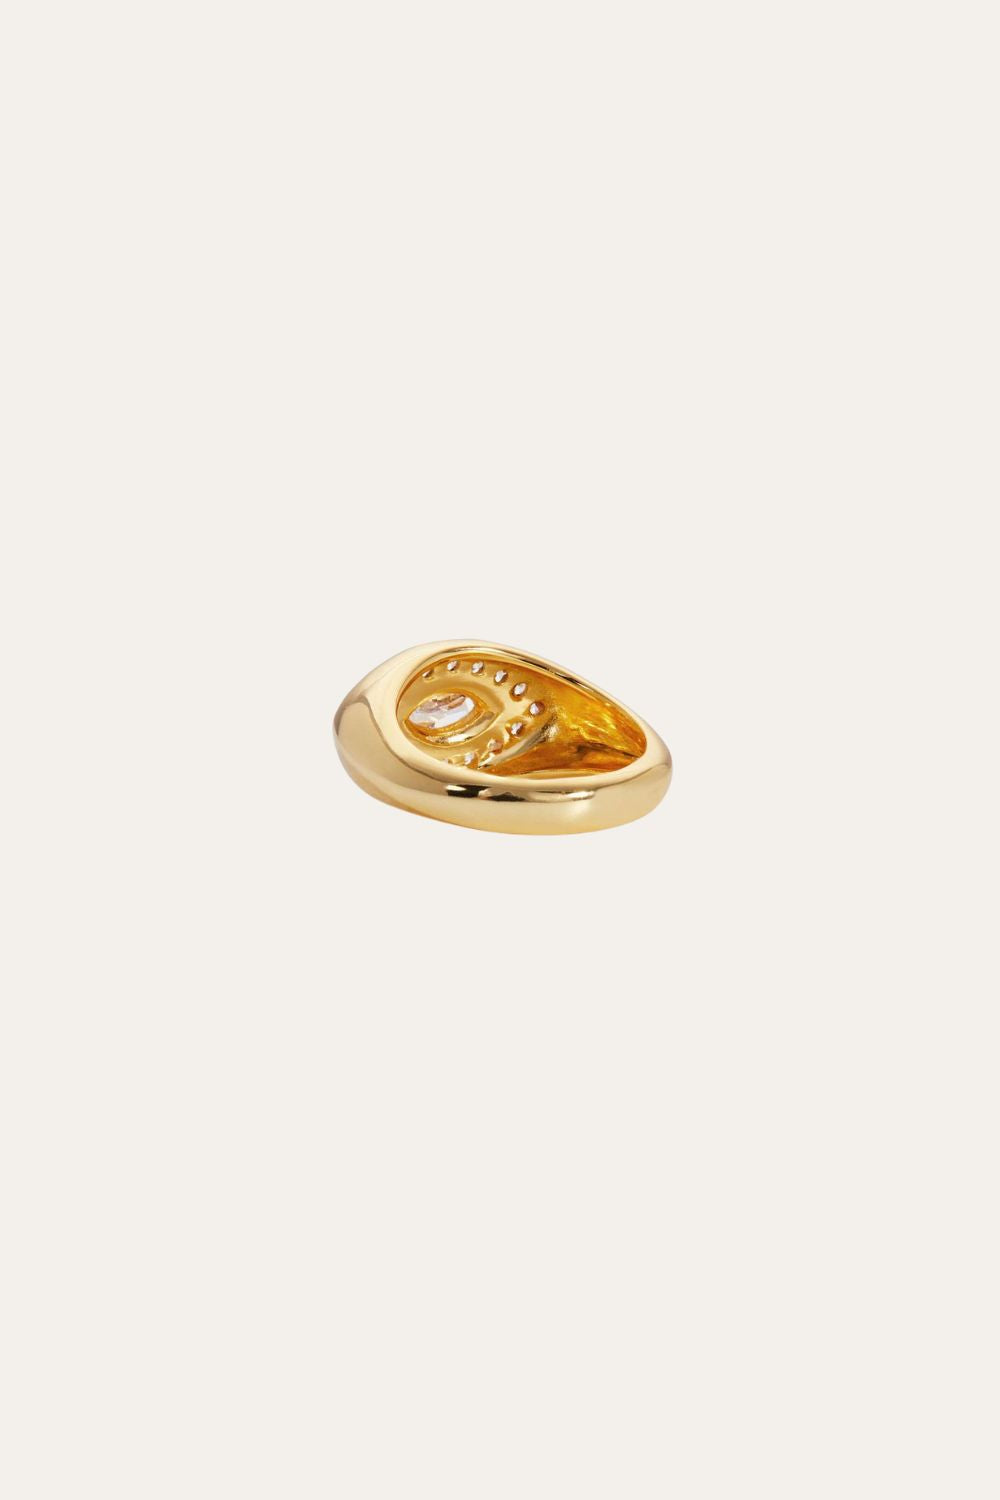 Evil eye gold vermeil signet ring